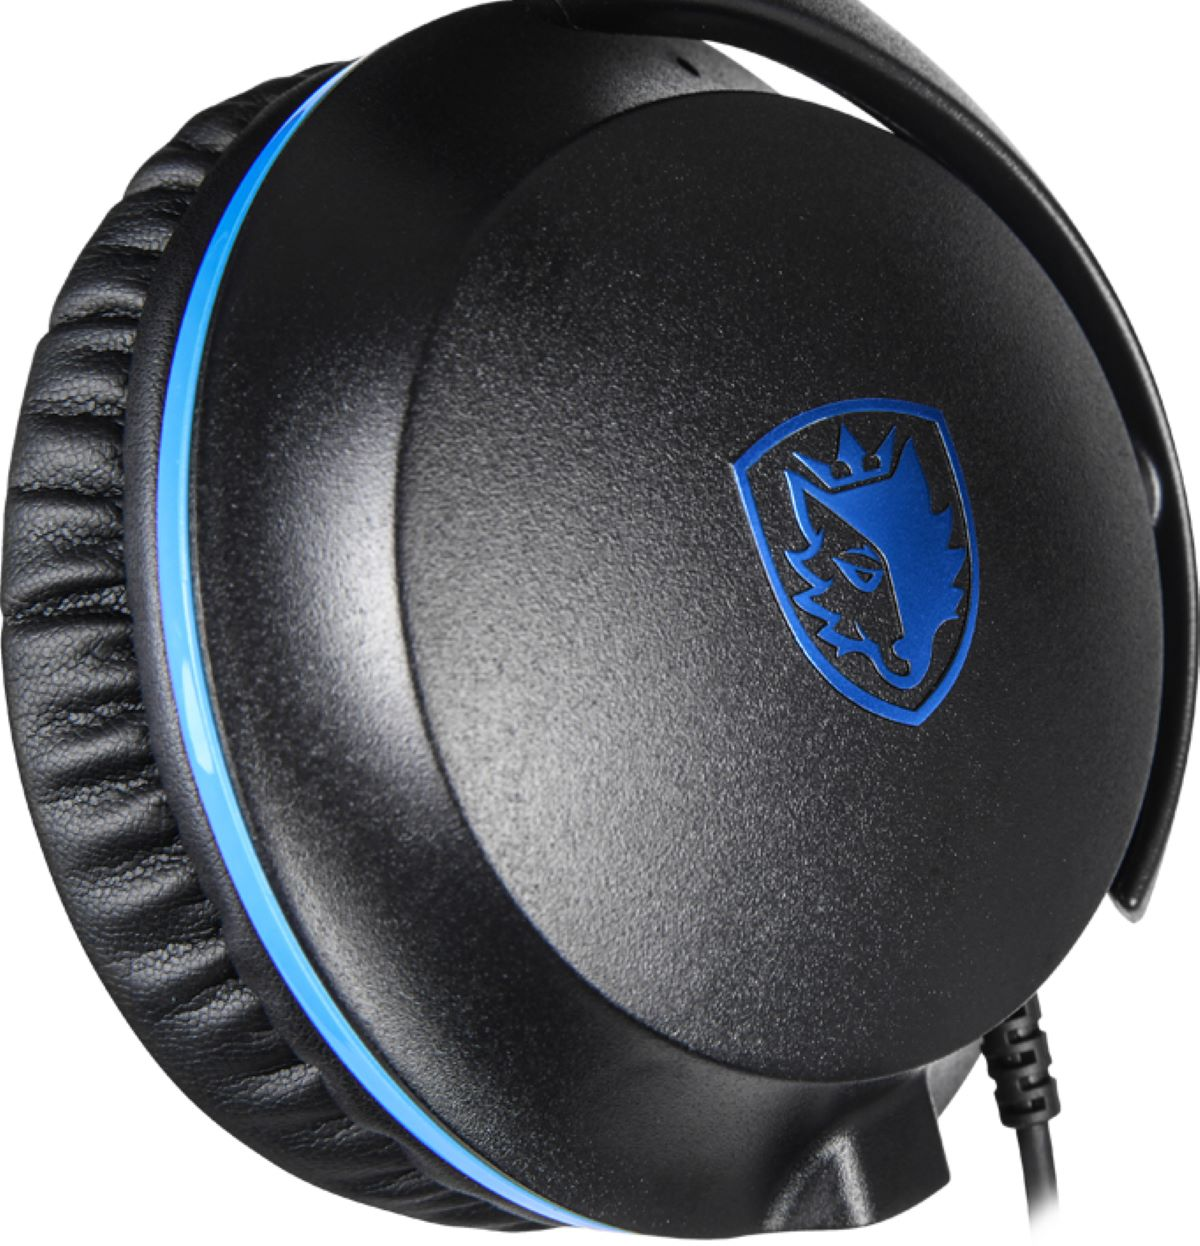 Fpower schwarz/blau SADES Over-ear Gaming-Headset SA-717,